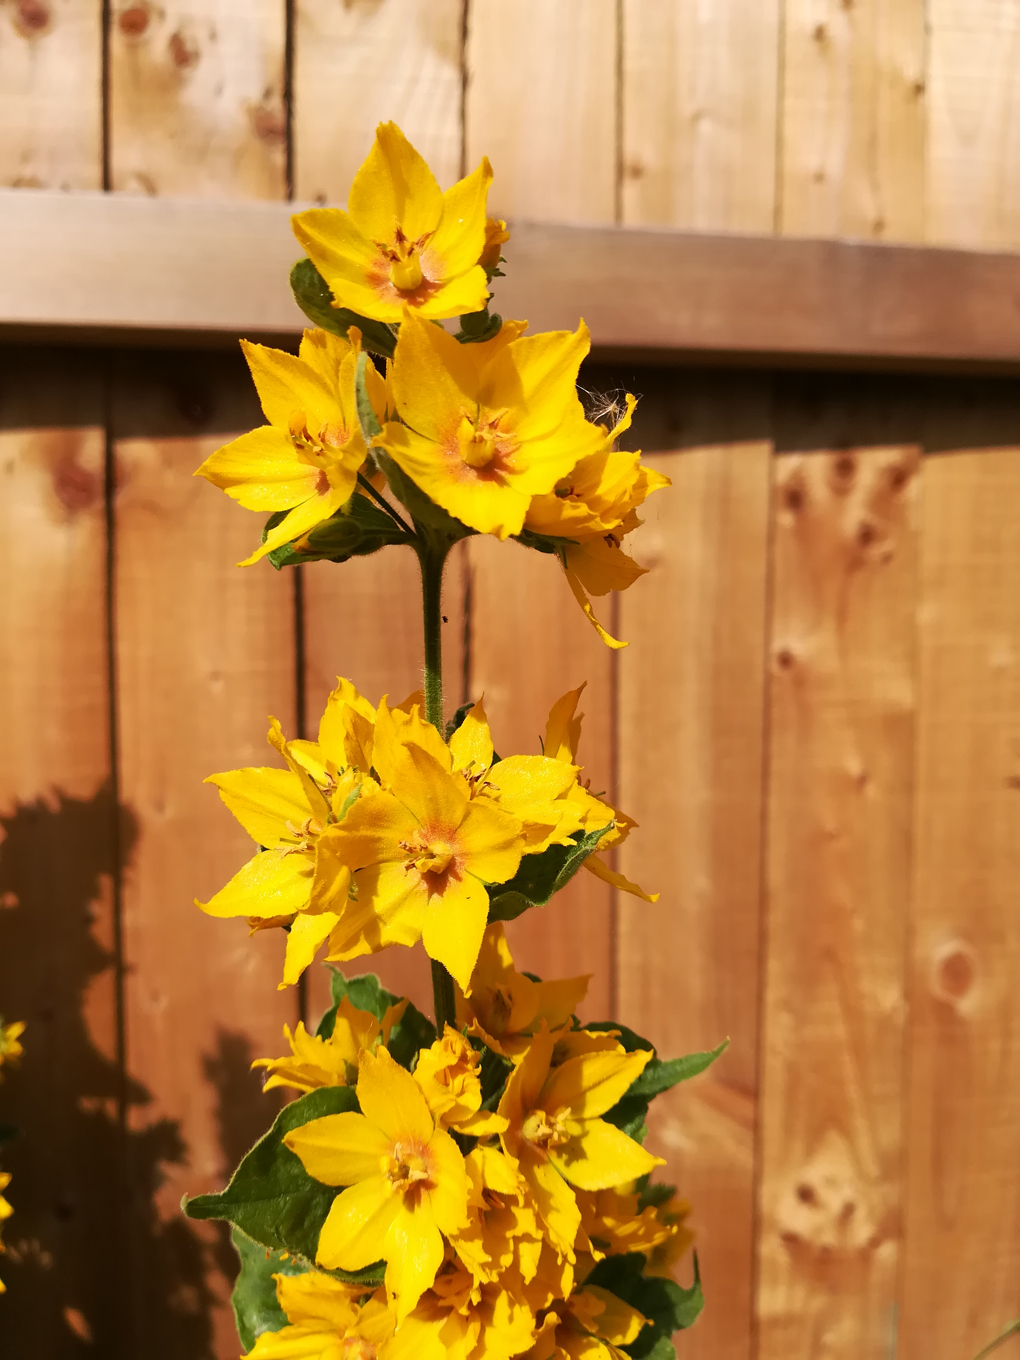 some nice yellow flowers